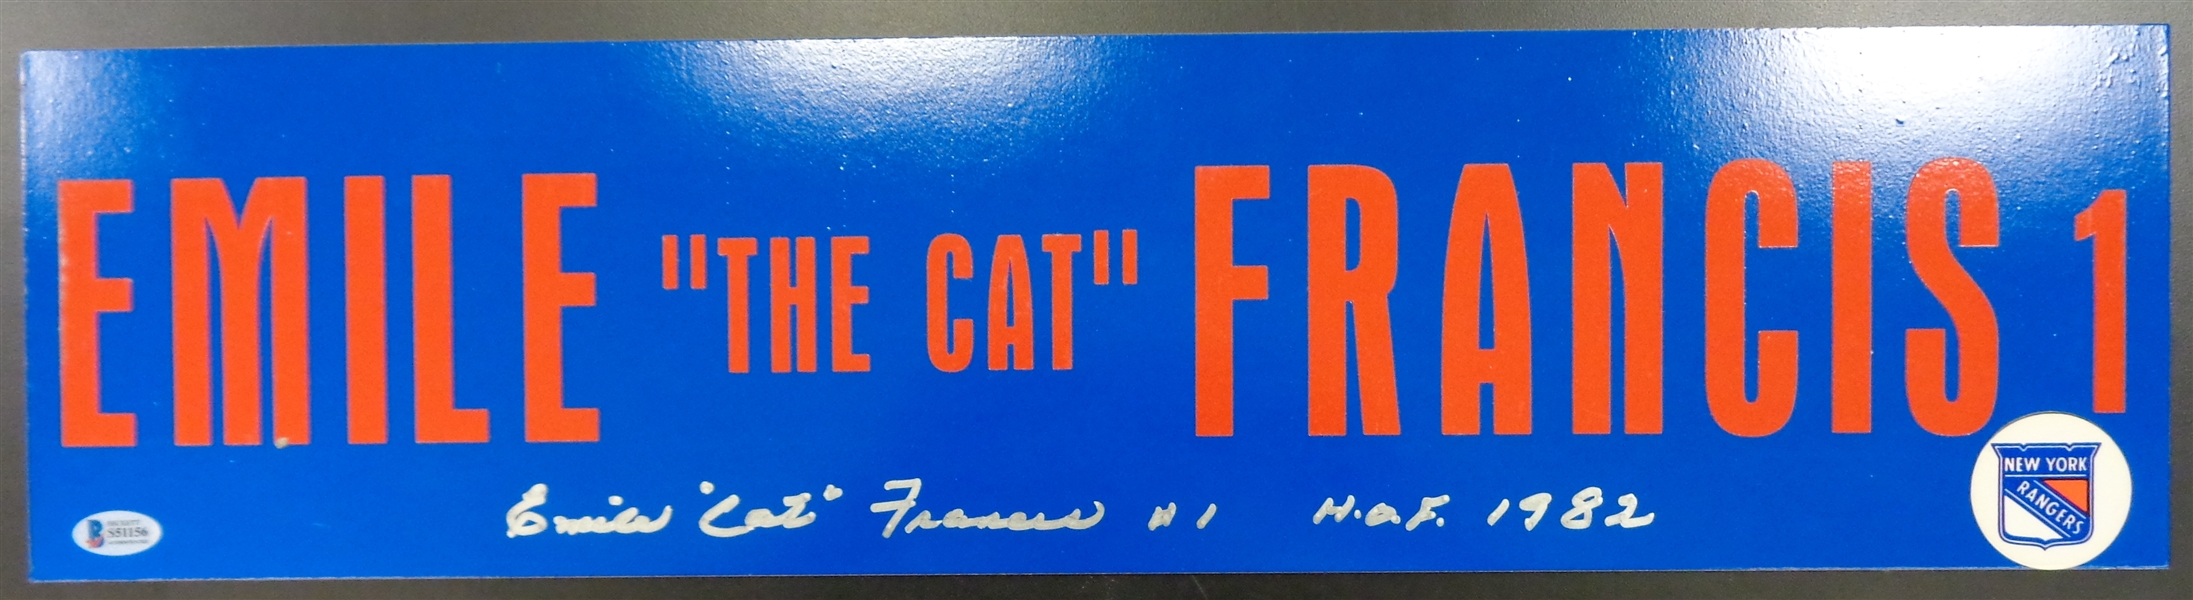 Emile "Cat" Francis Autographed Custom 24x6 Metal Sign